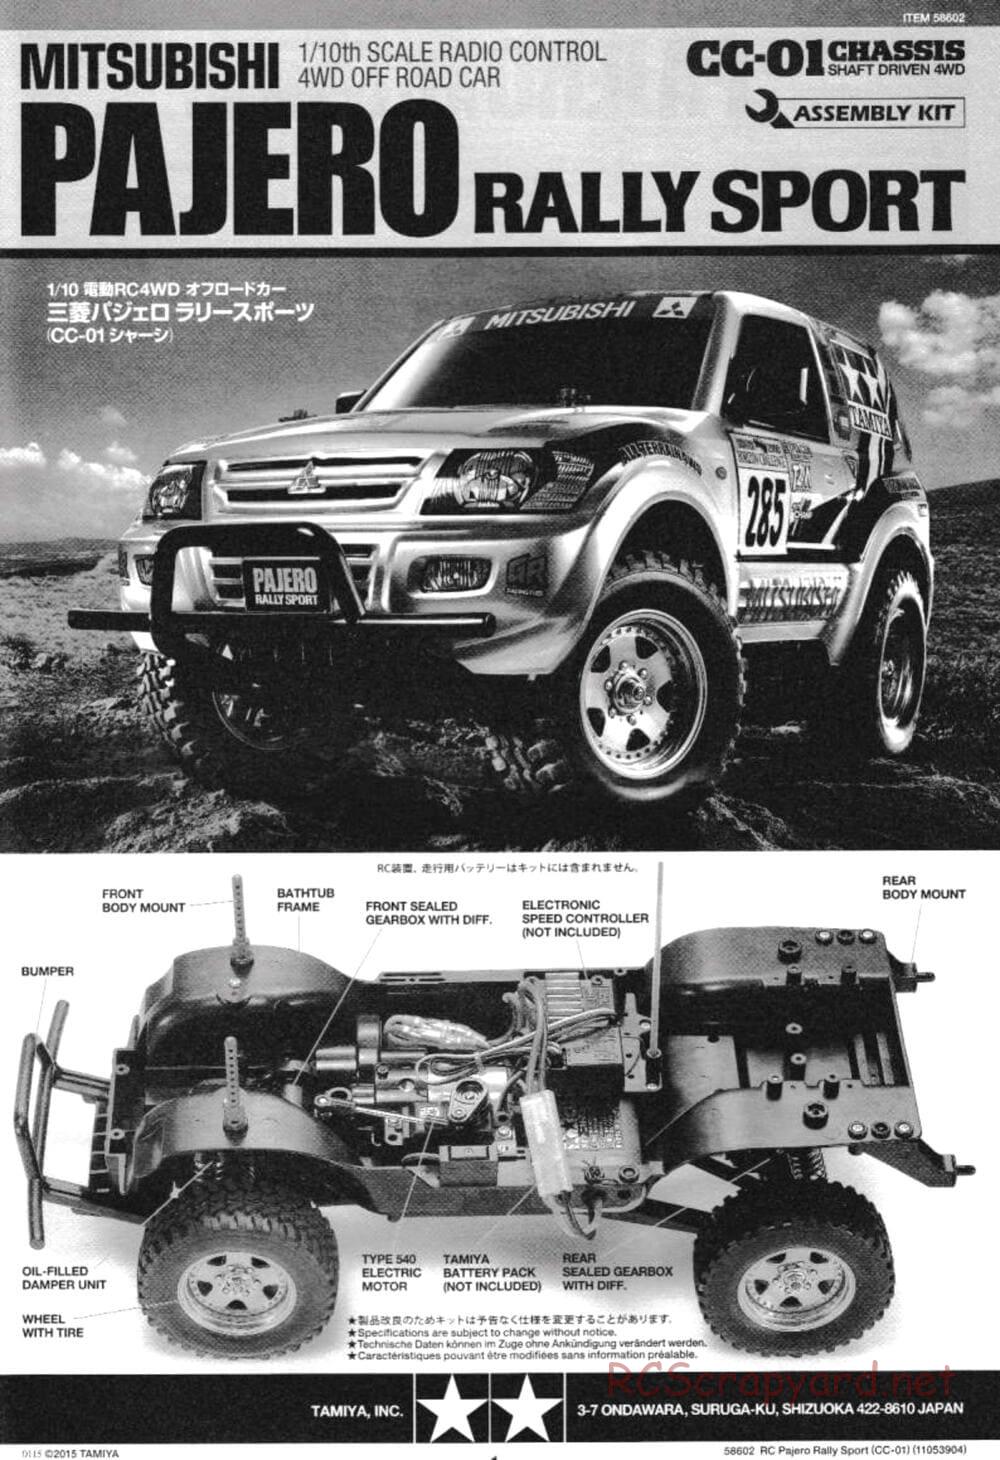 Tamiya - Mitsubishi Pajero Rally Sport - CC-01 Chassis - Manual - Page 1